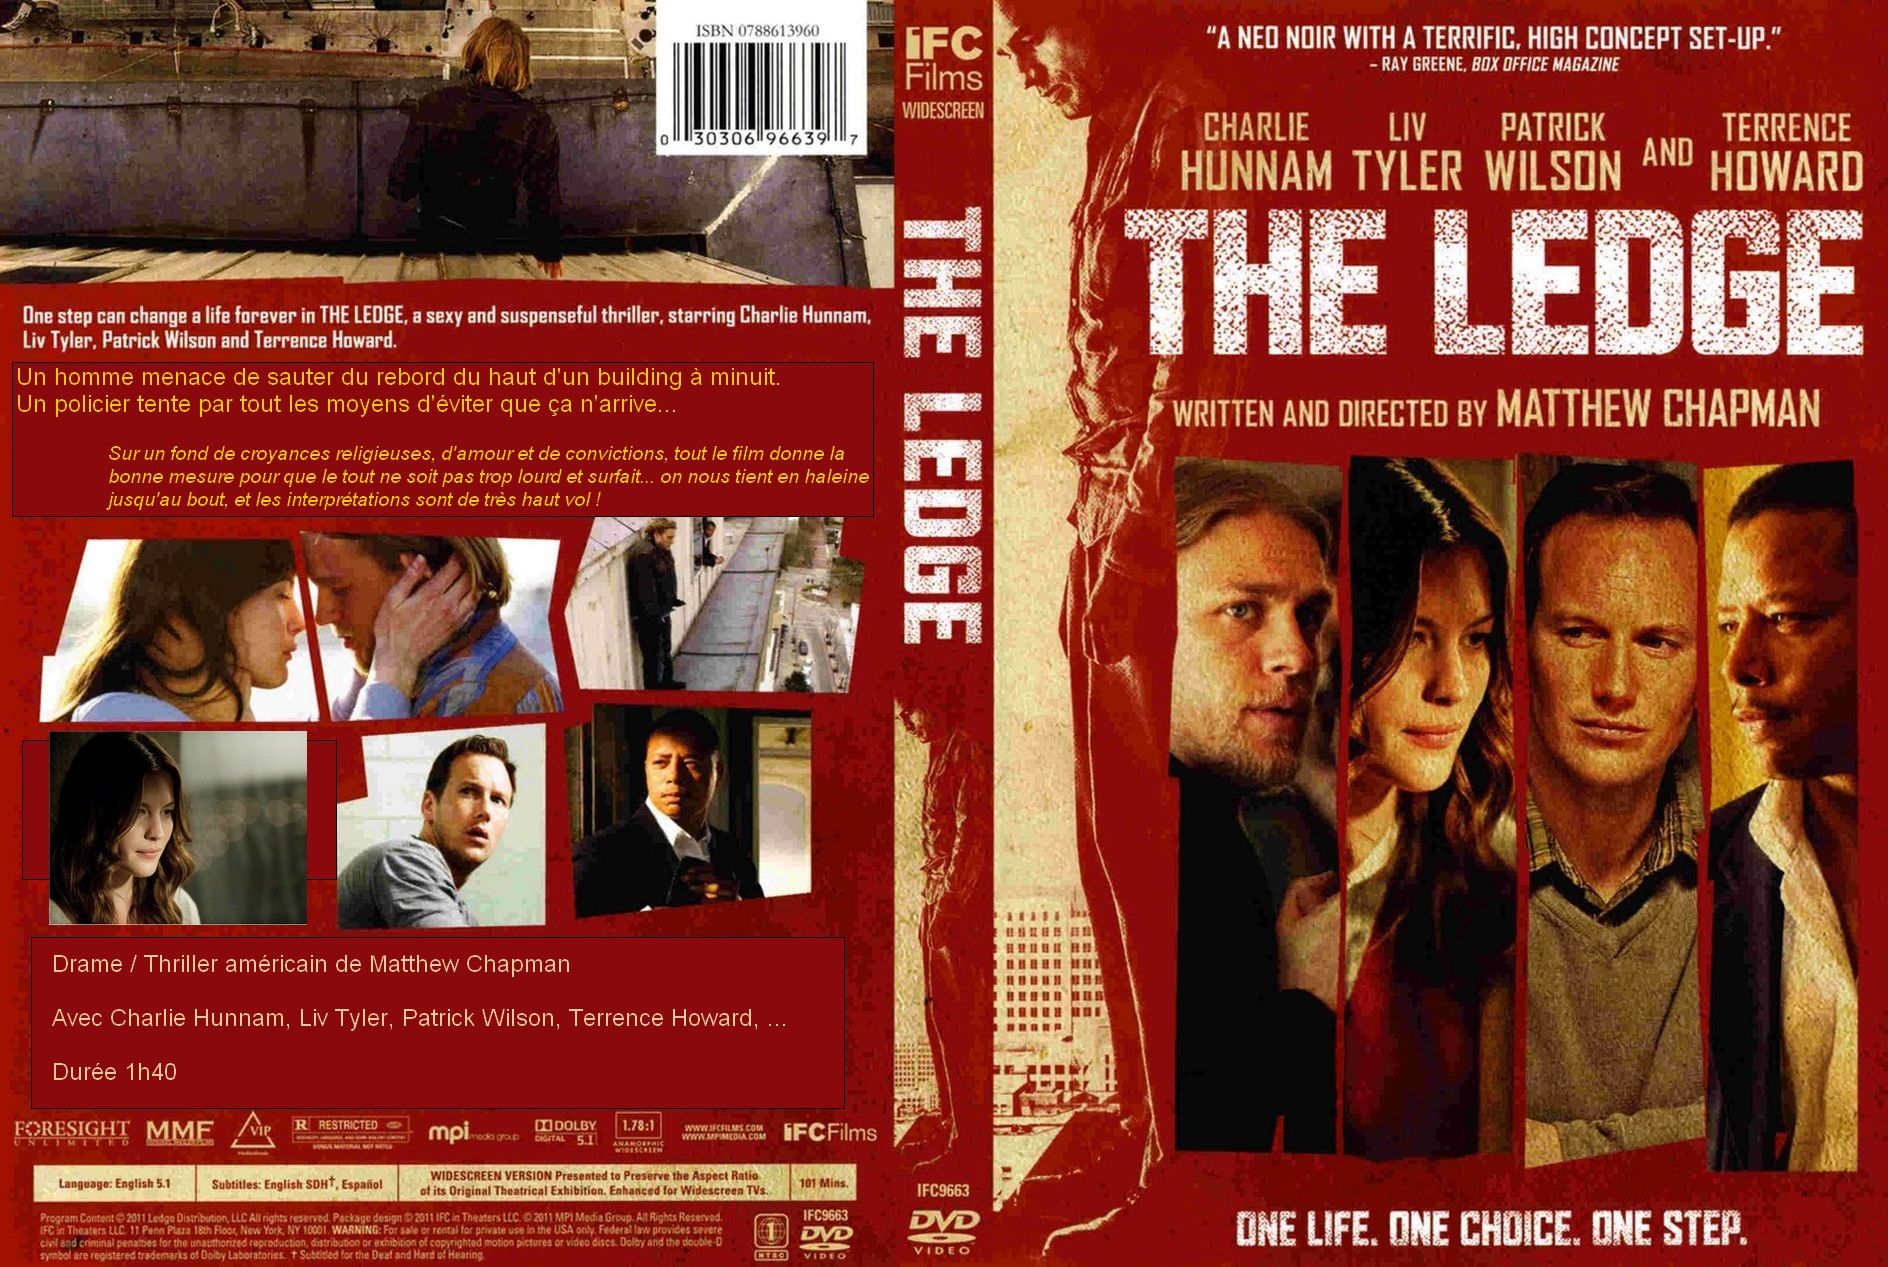 Jaquette DVD The Ledge custom